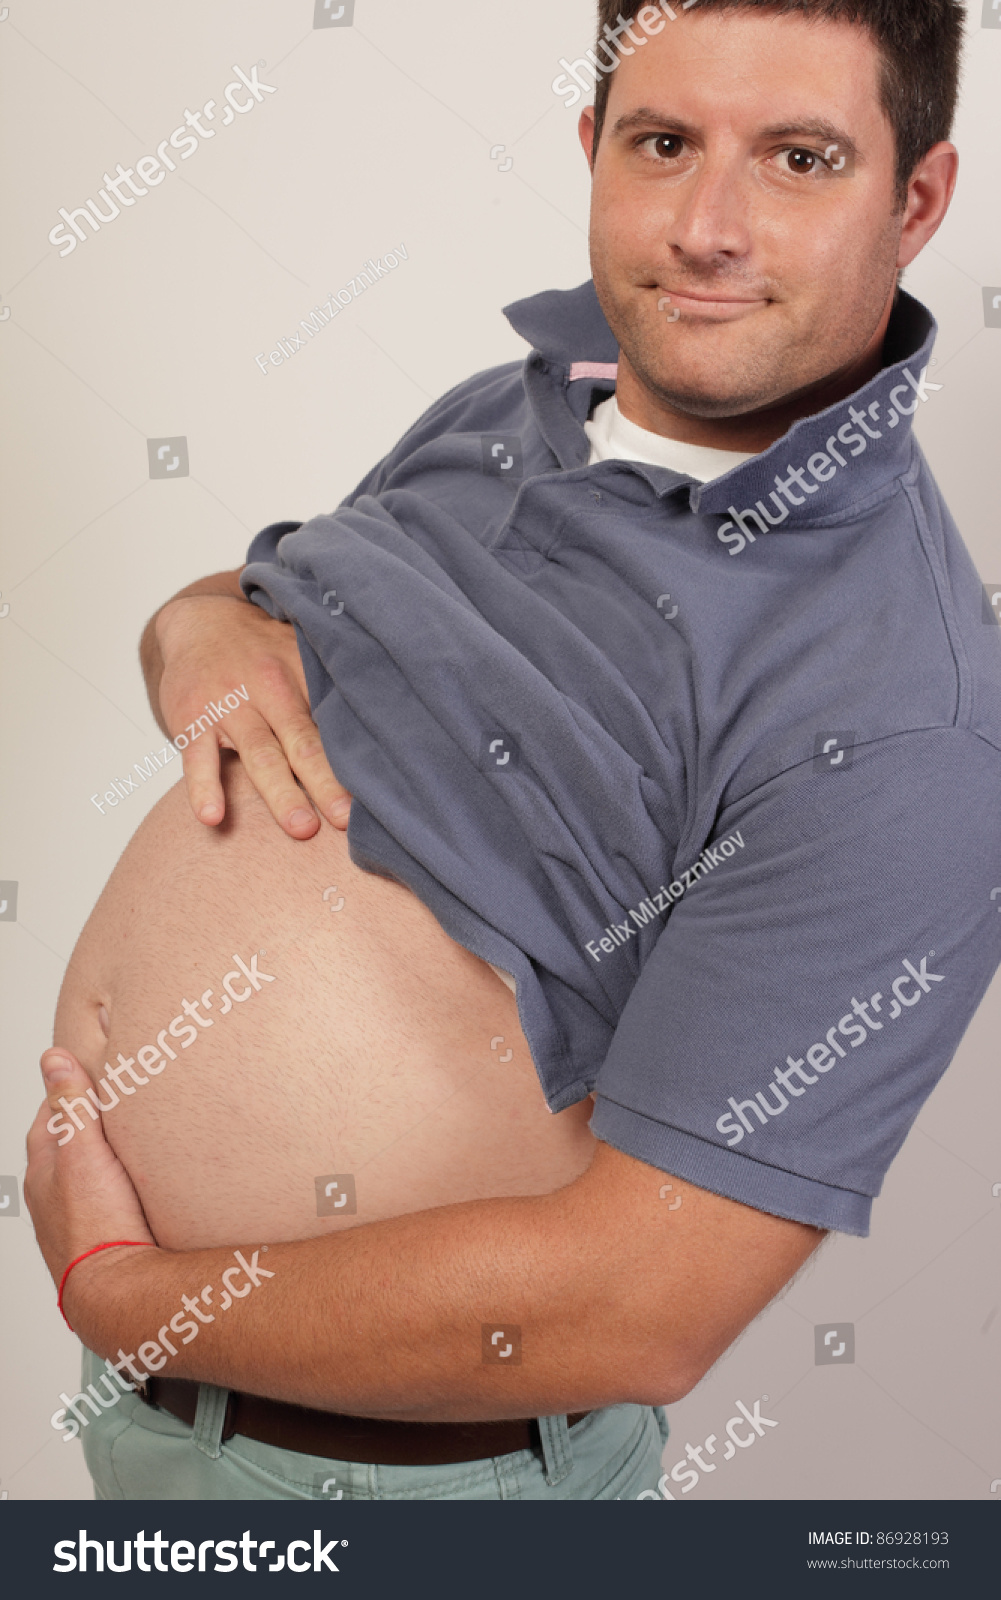 A Pregnant Guy 45